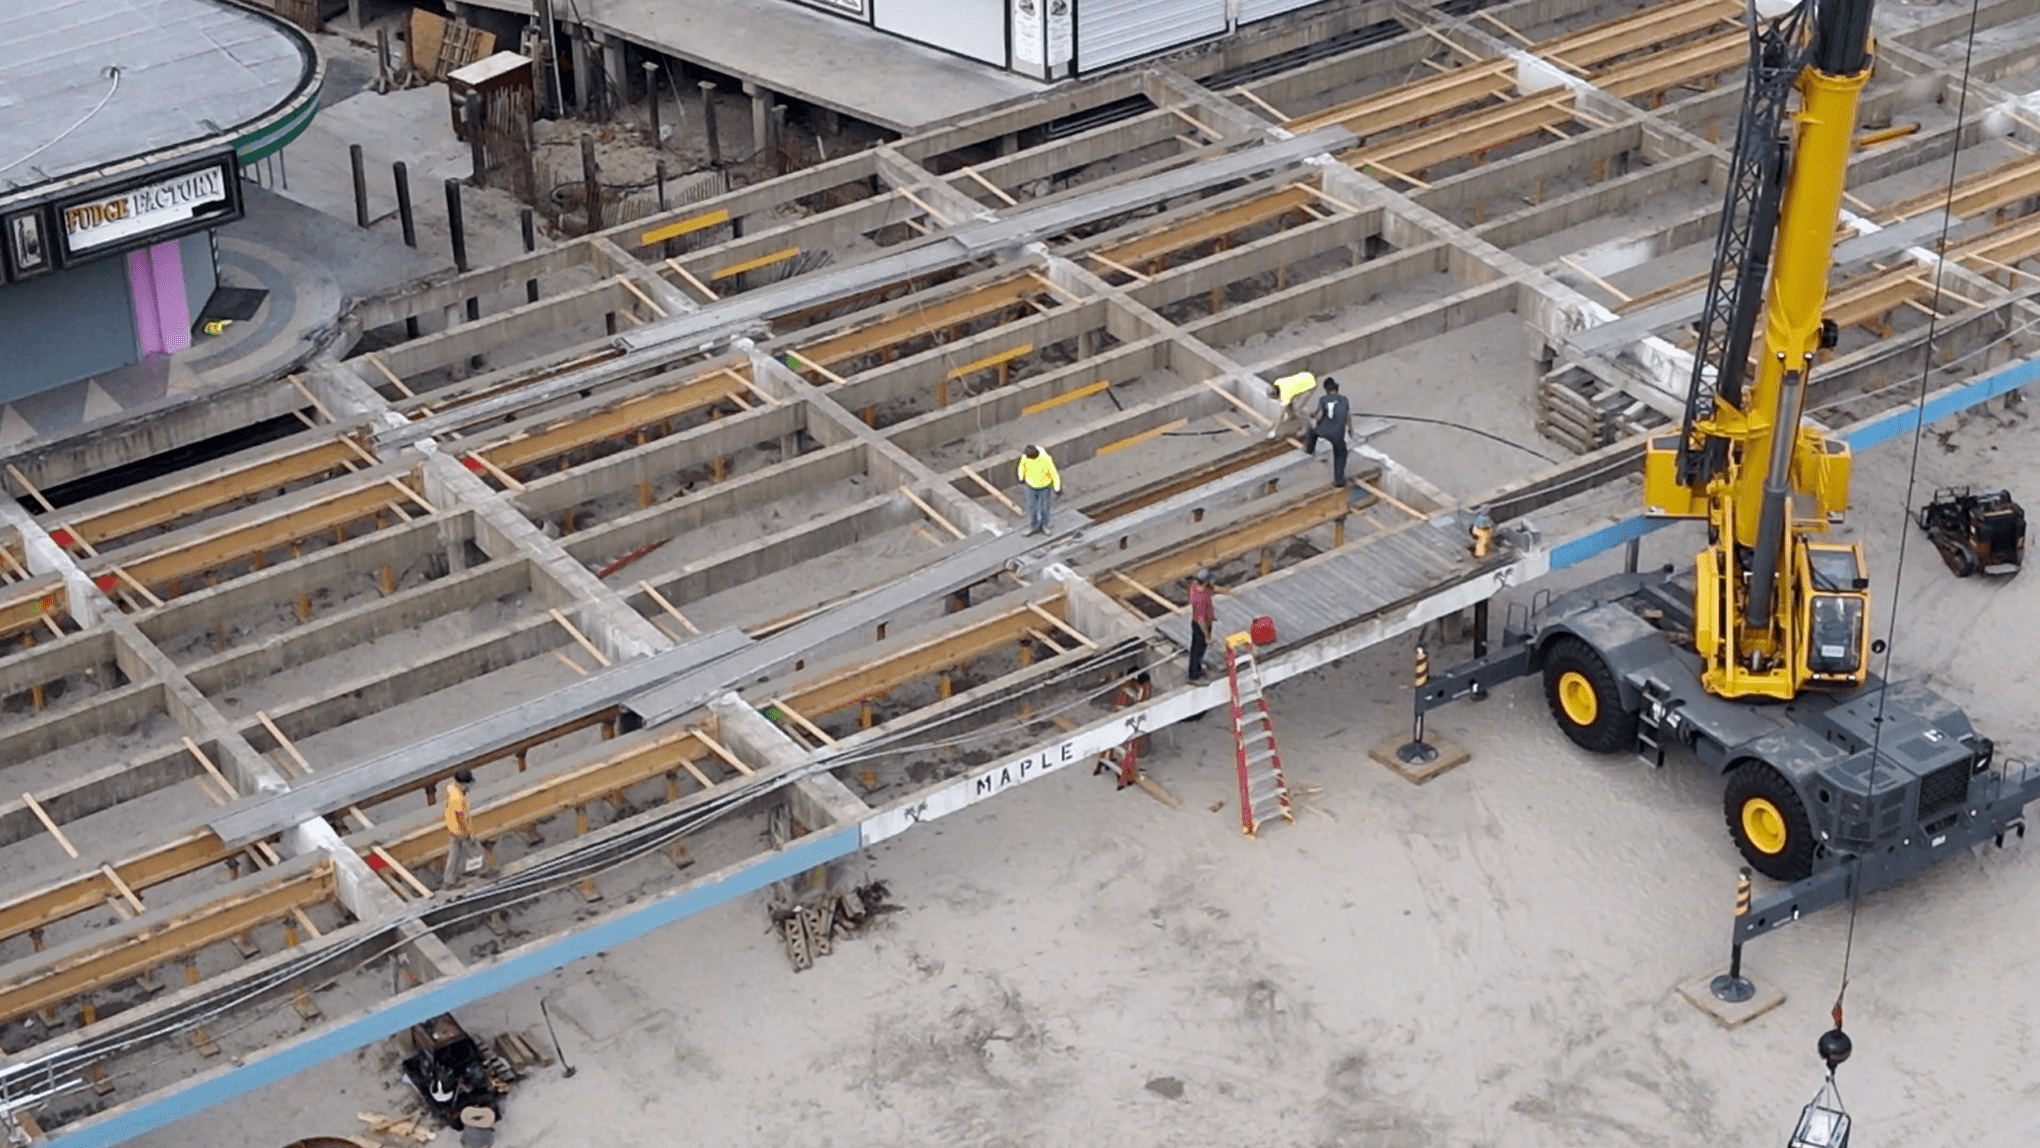 Wildwood Boardwalk Reconstruction Drone Tour - Nov 2022